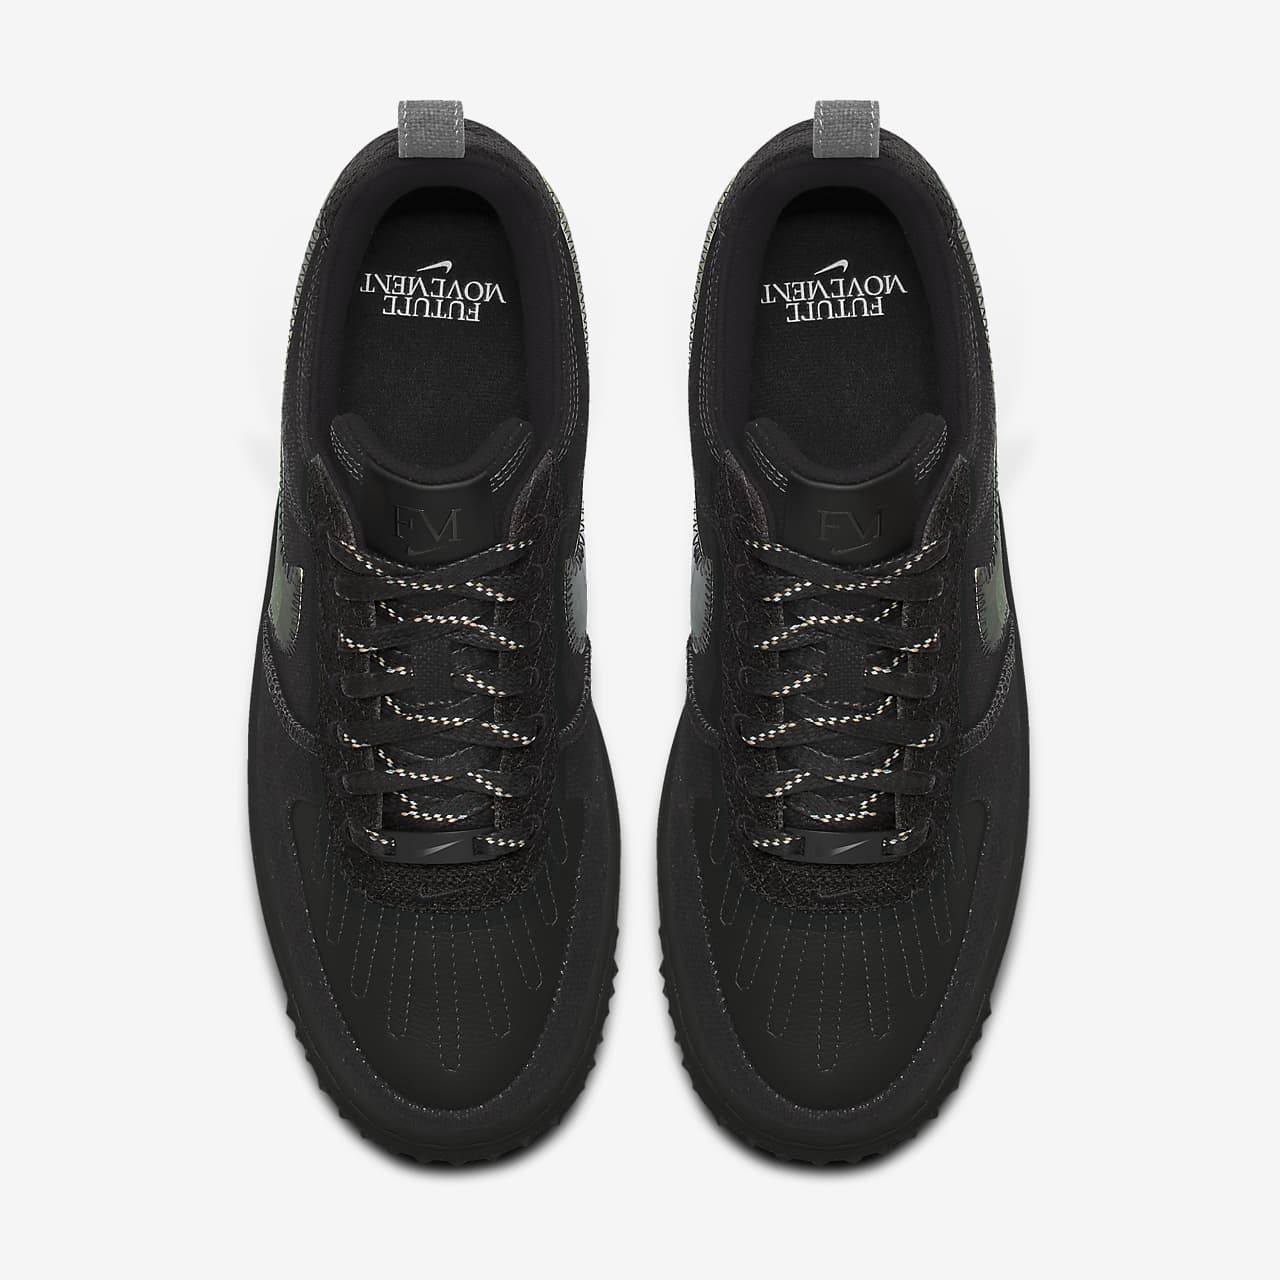 Men's Nike Air Force 1 Low SE Mini Swoosh Casual Shoes